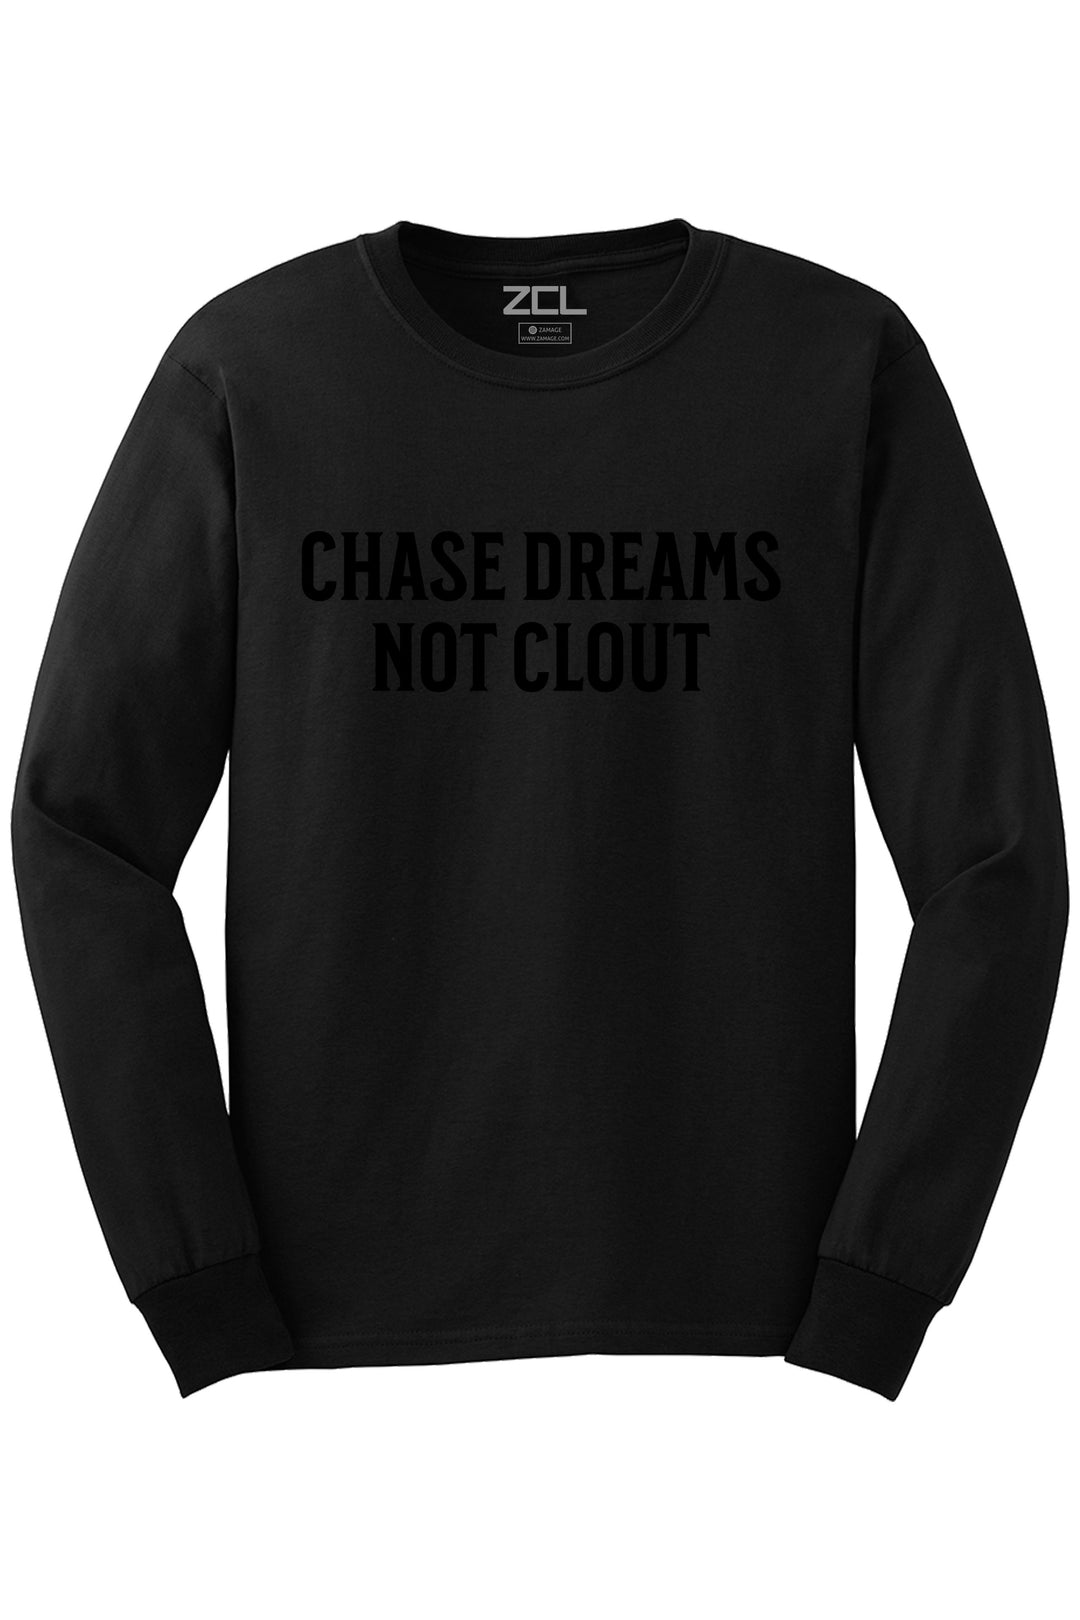 Chase Dreams Not Clout Long Sleeve Tee (Black Logo) - Zamage